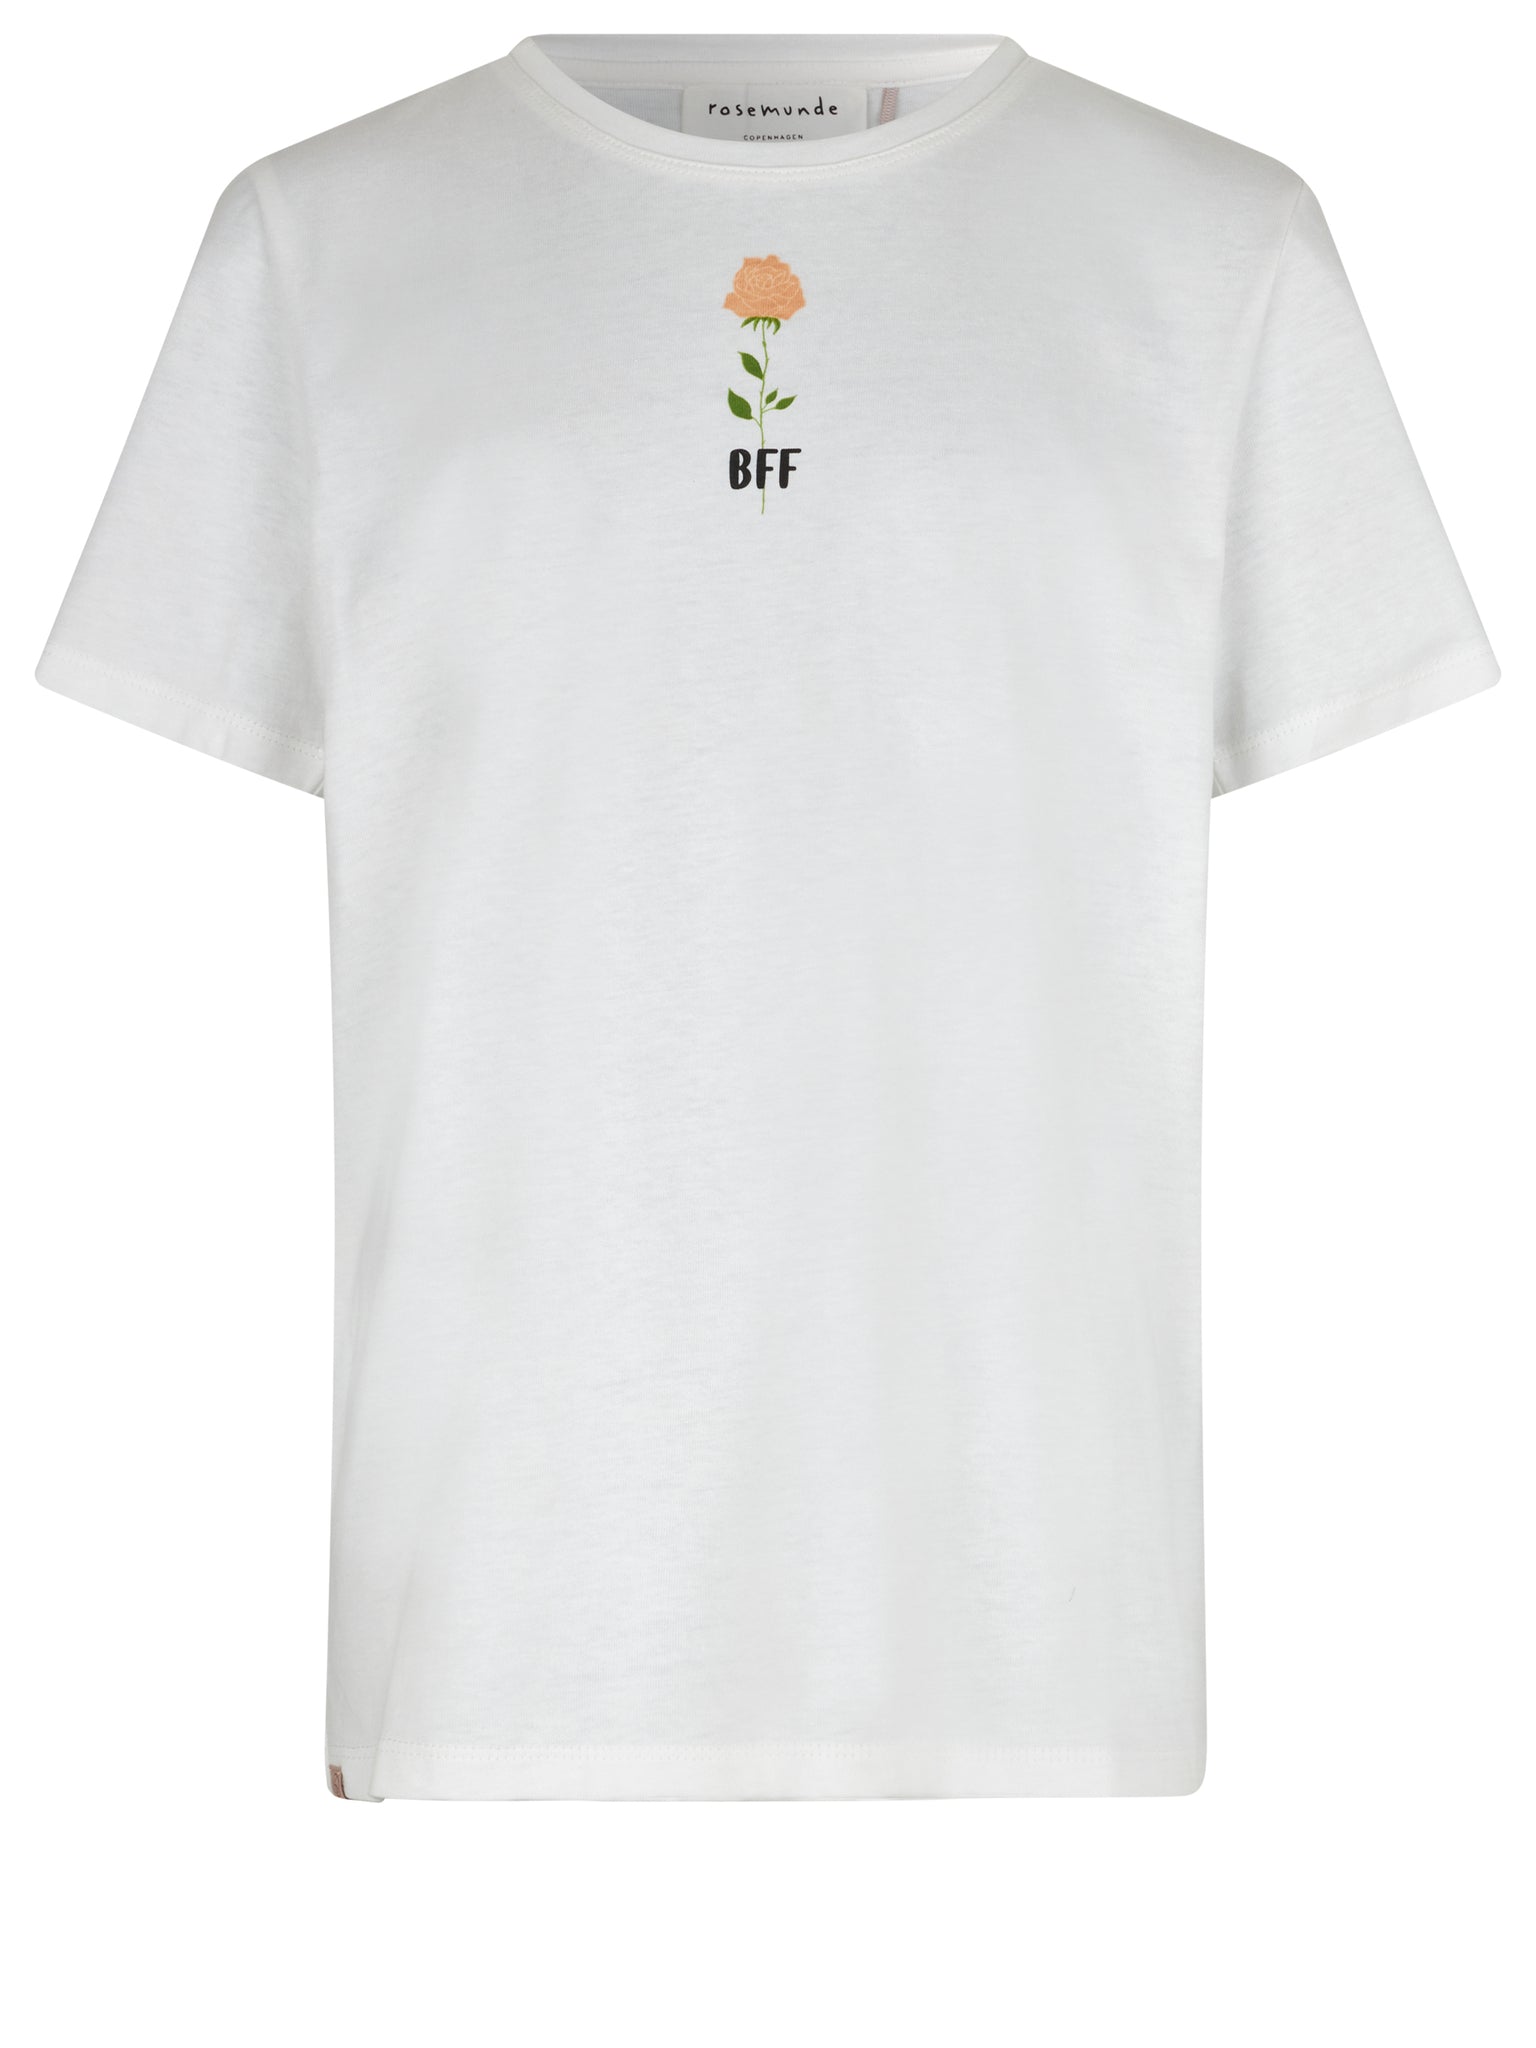 Organic t-shirt for girls